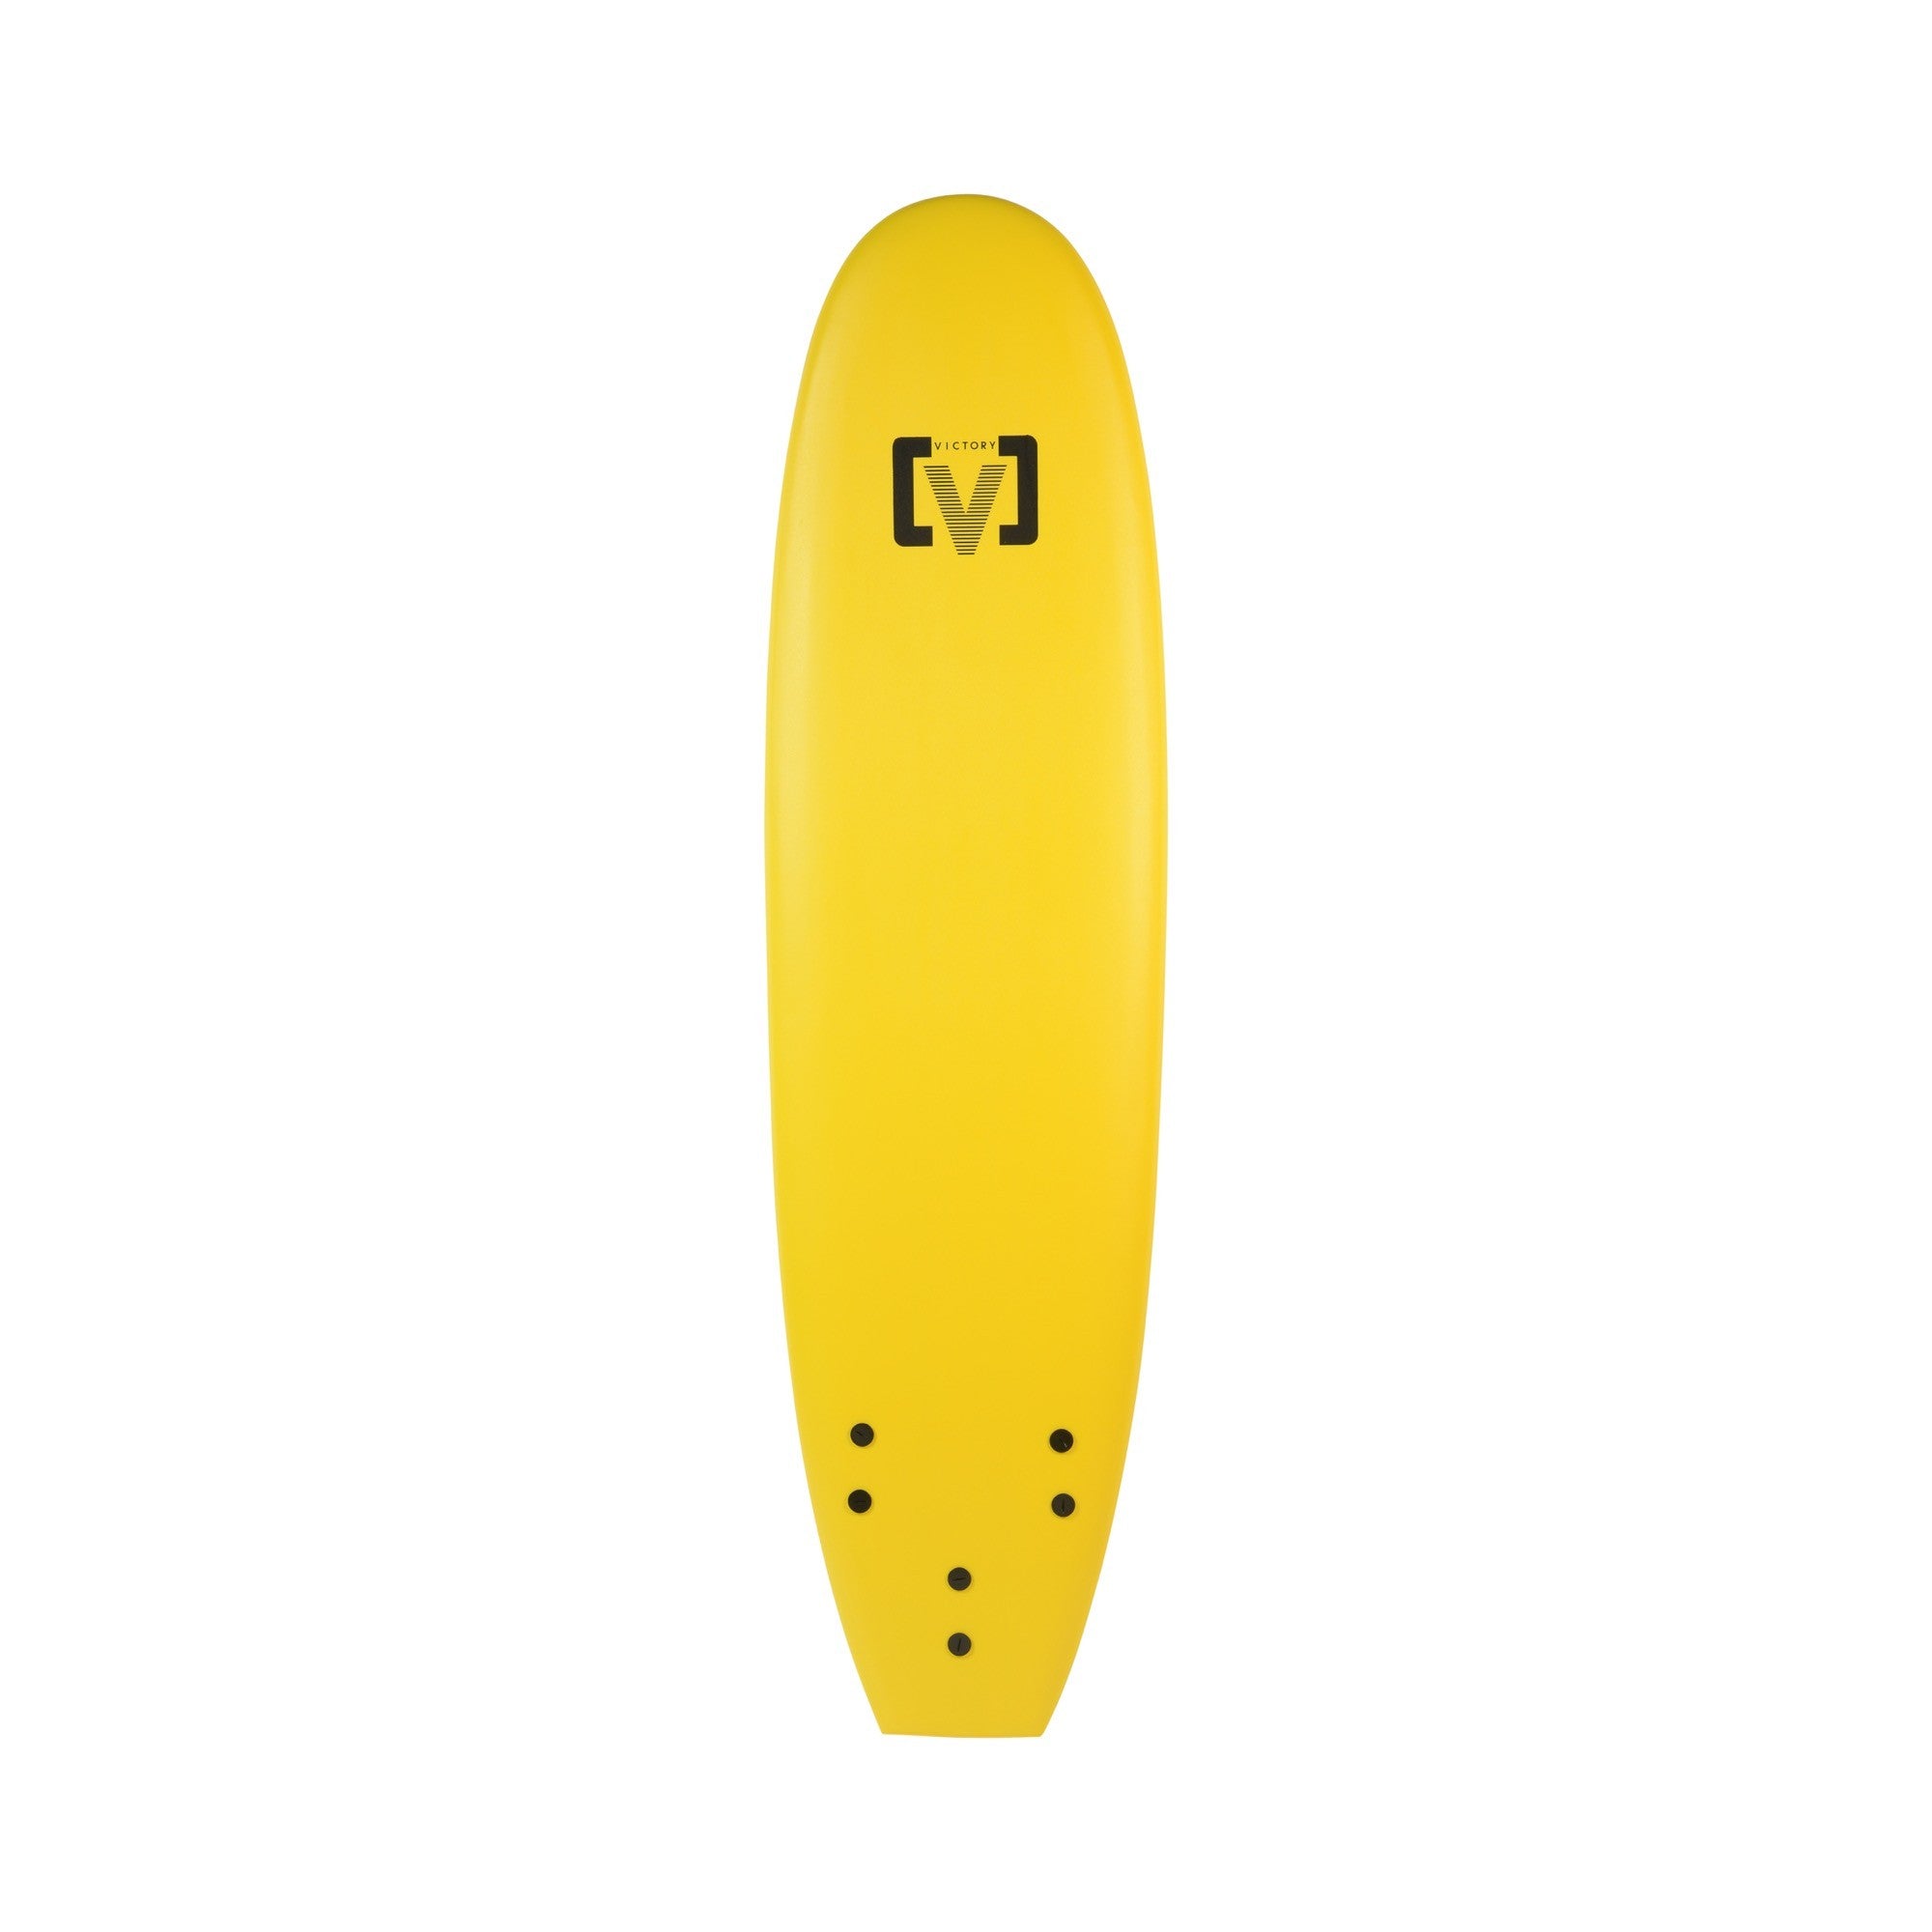 VICTORY - EPS Softboard - Foam Surfboard - Malibu High Volume 7'0 - Yellow